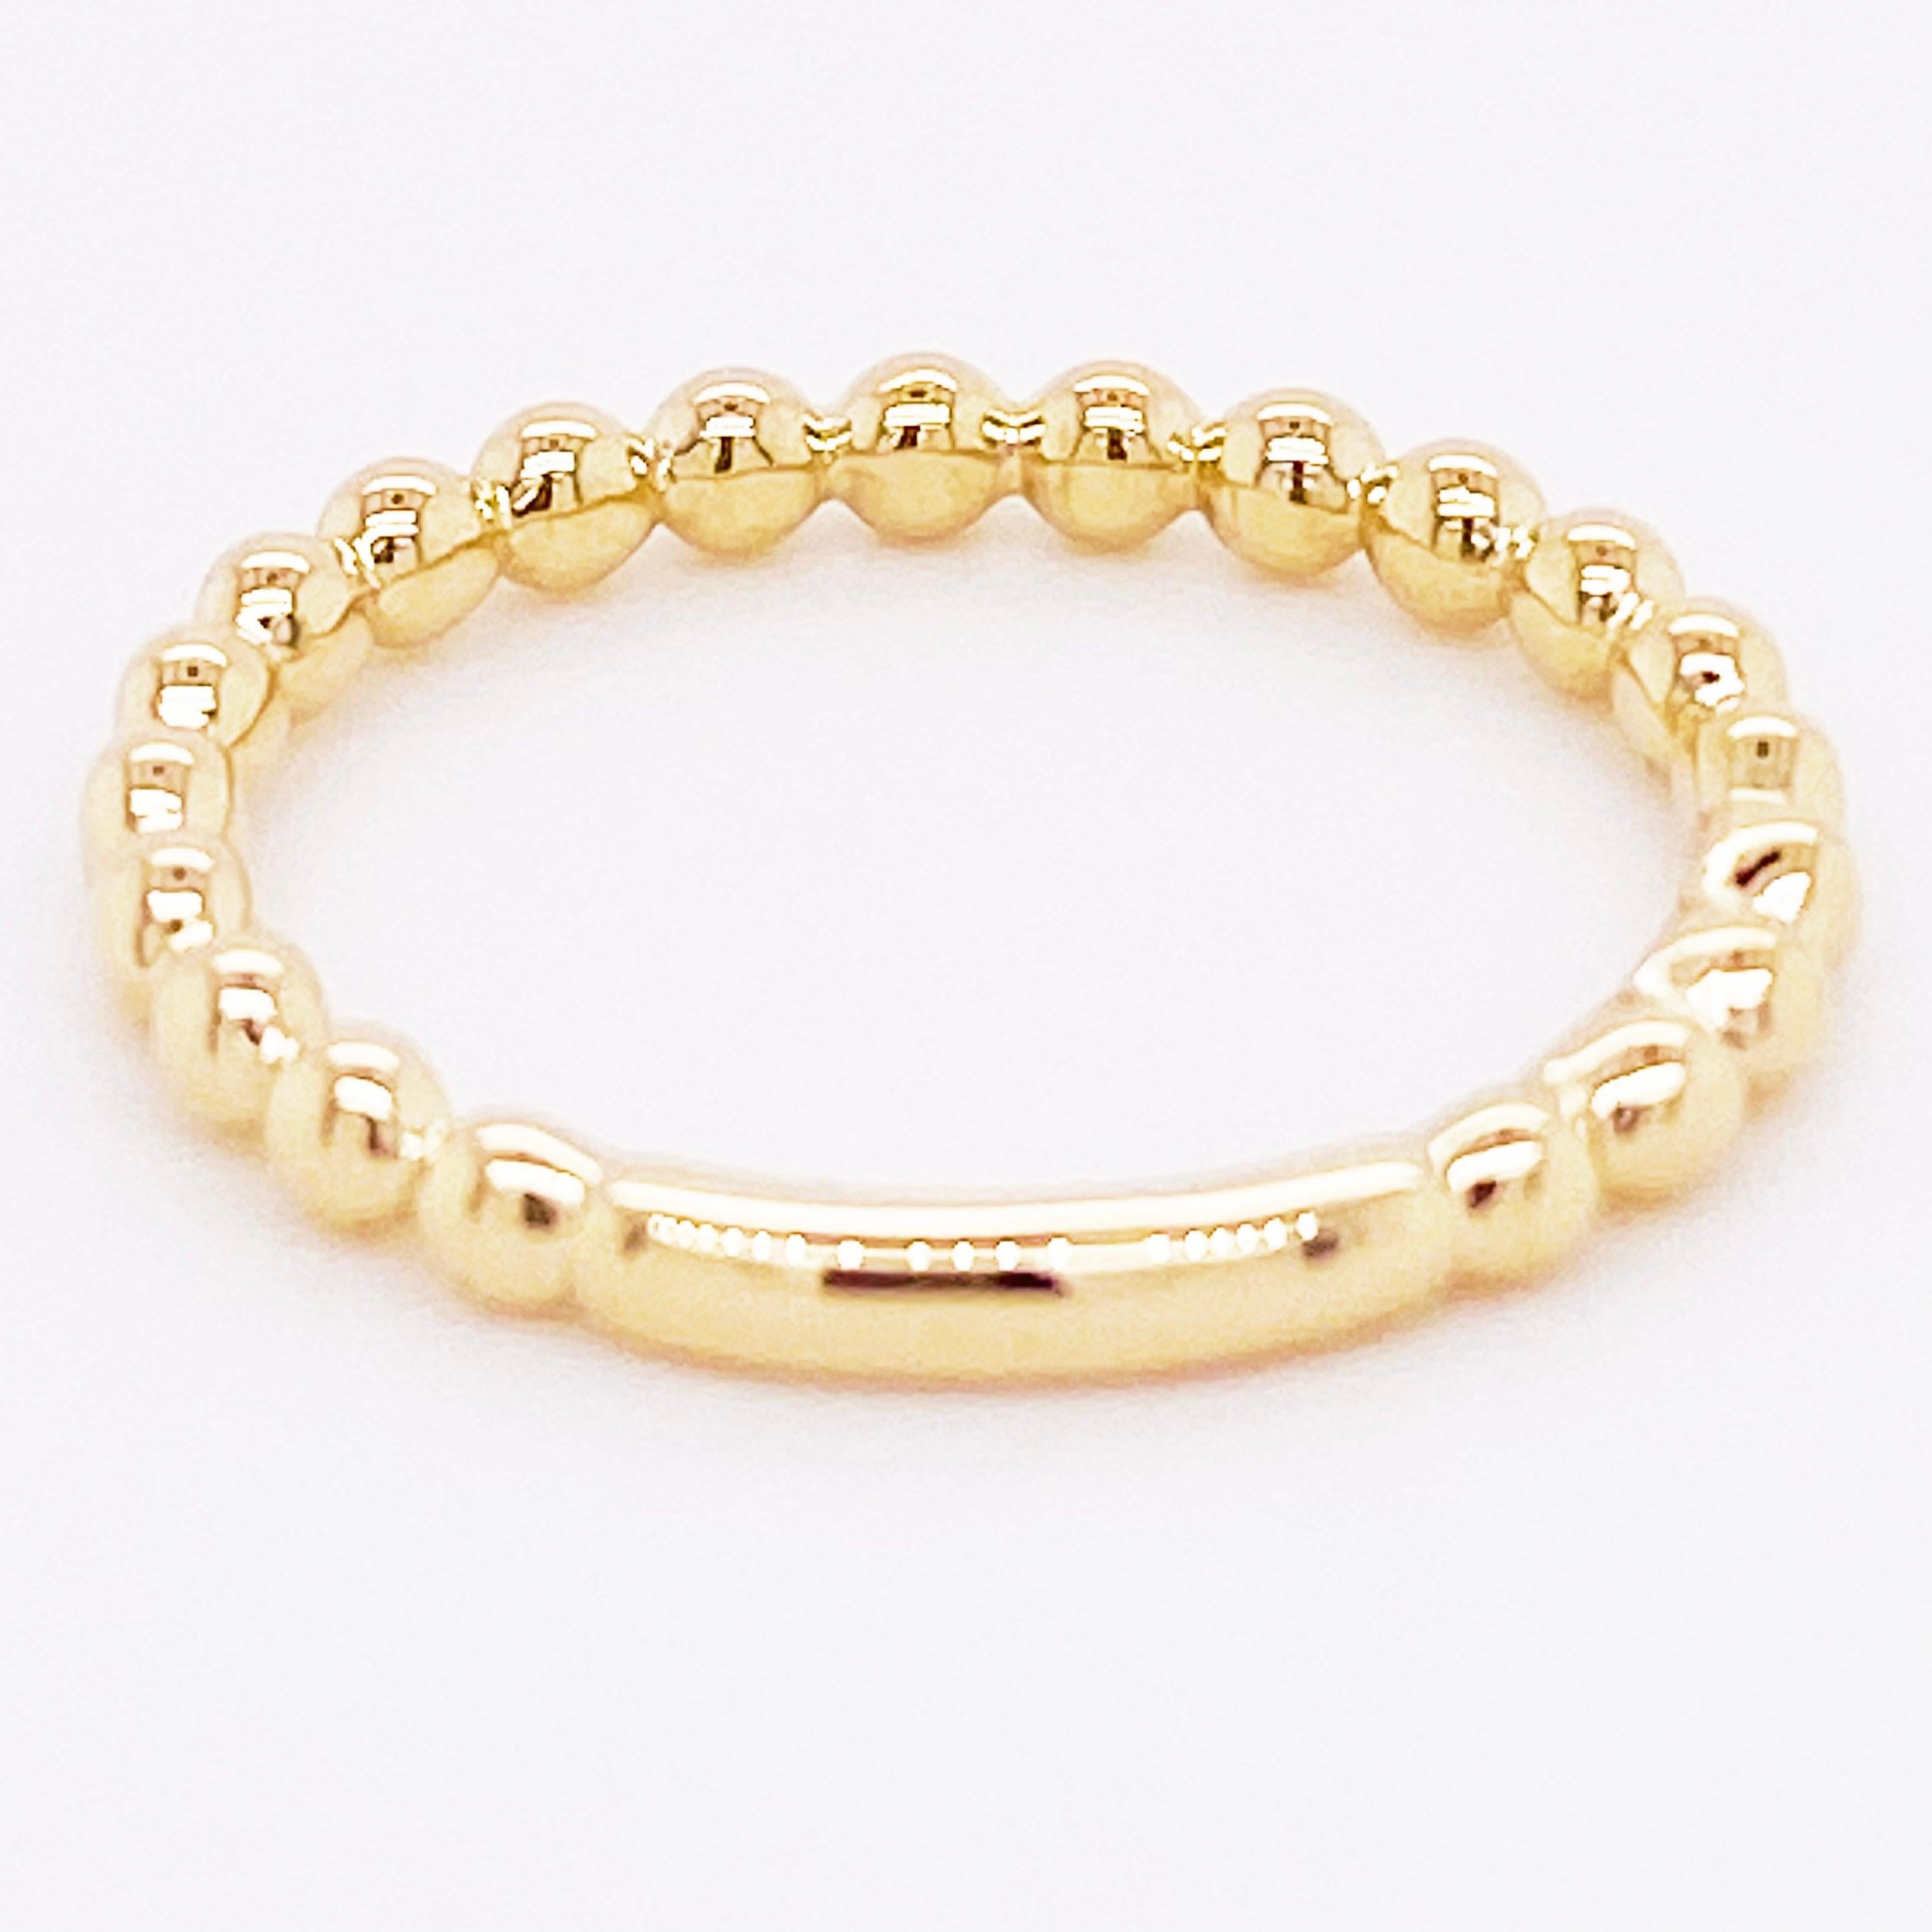 Im Angebot: Goldperlenring, 14 Karat Gelbgold Perlenring, stapelbarer Ring, 2021 Echt () 5